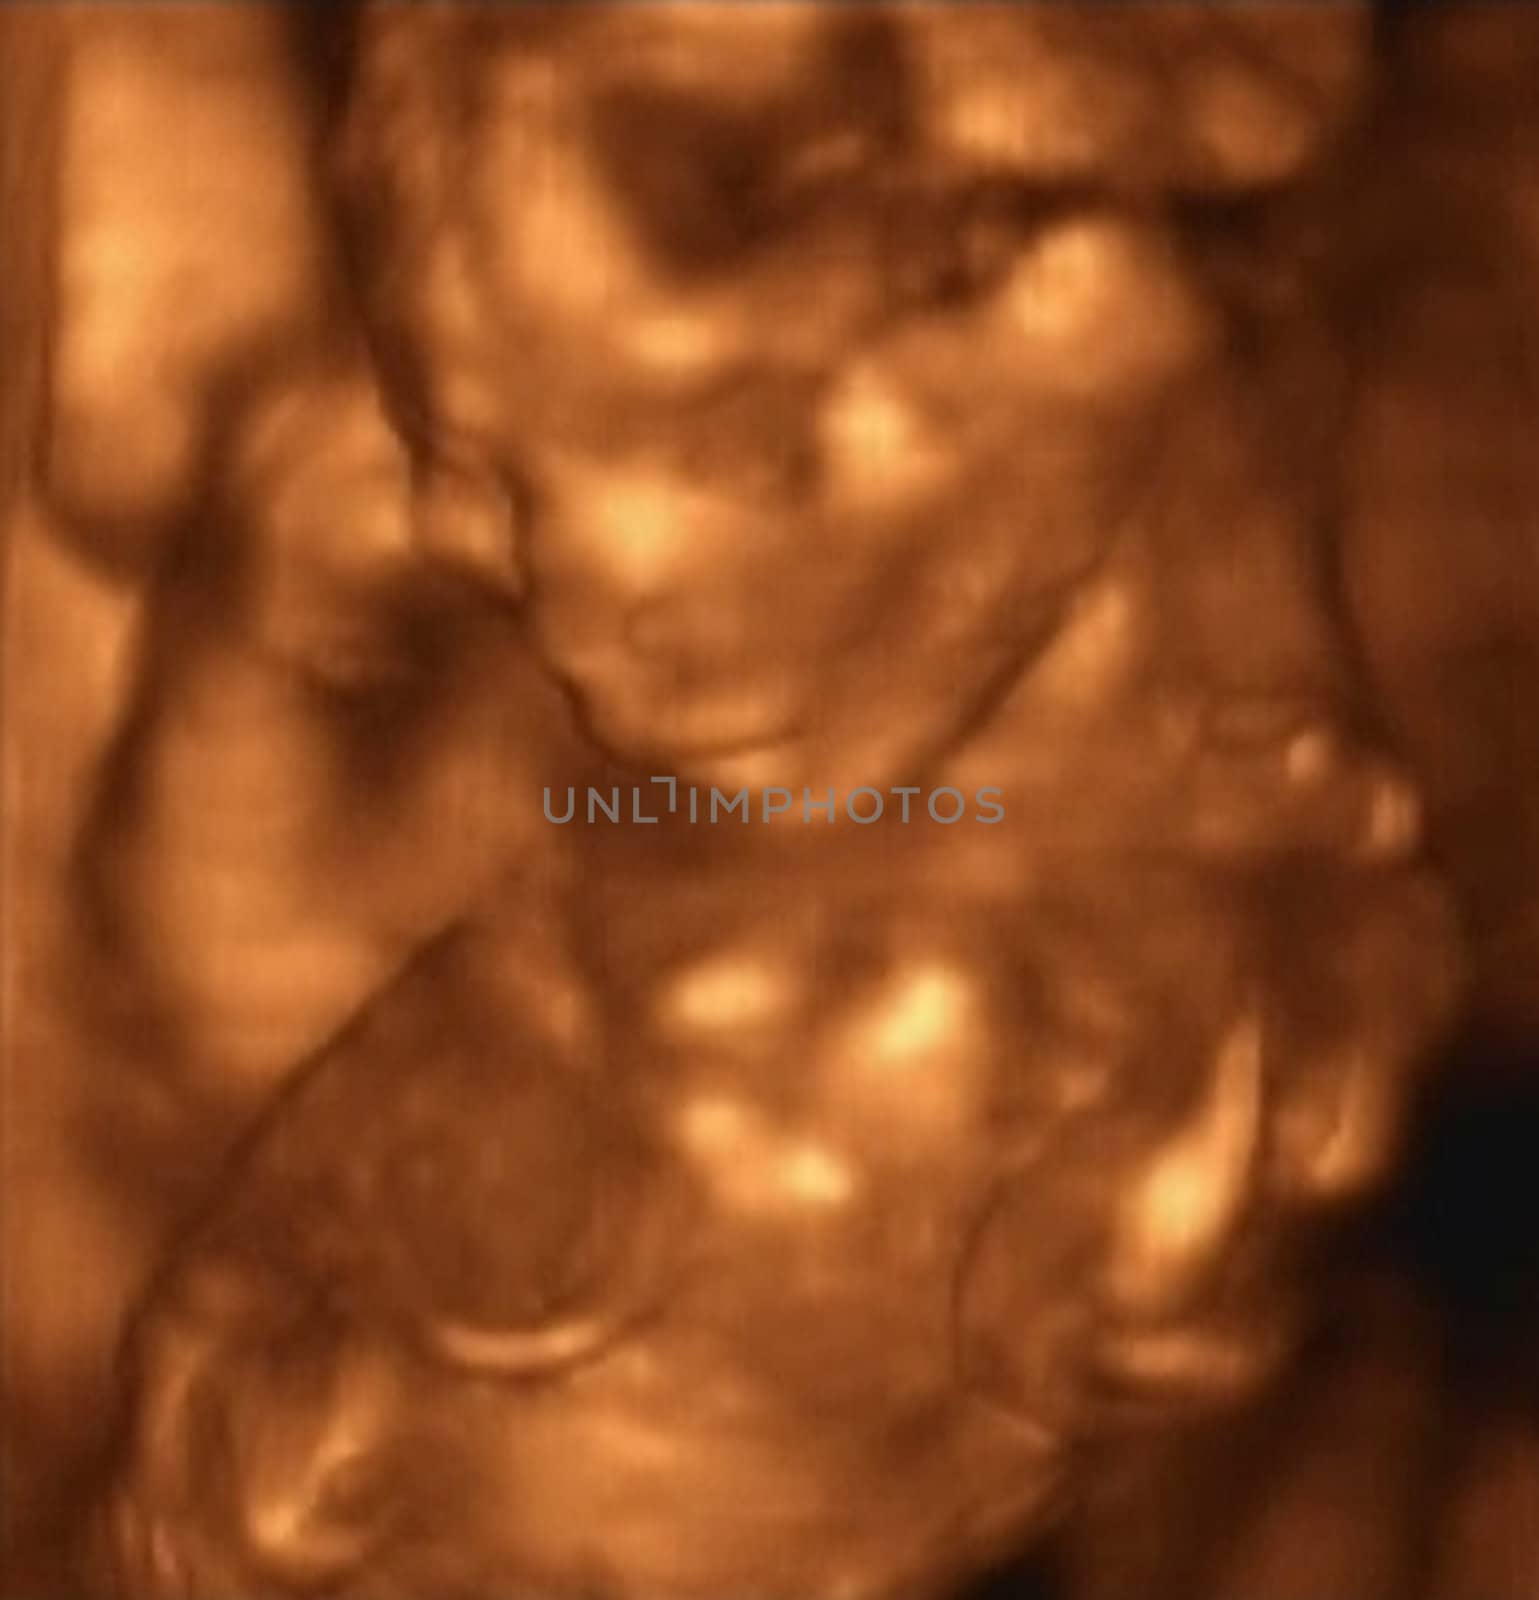 Three Dimensional Ultrasonography of Fourt Month Fetus